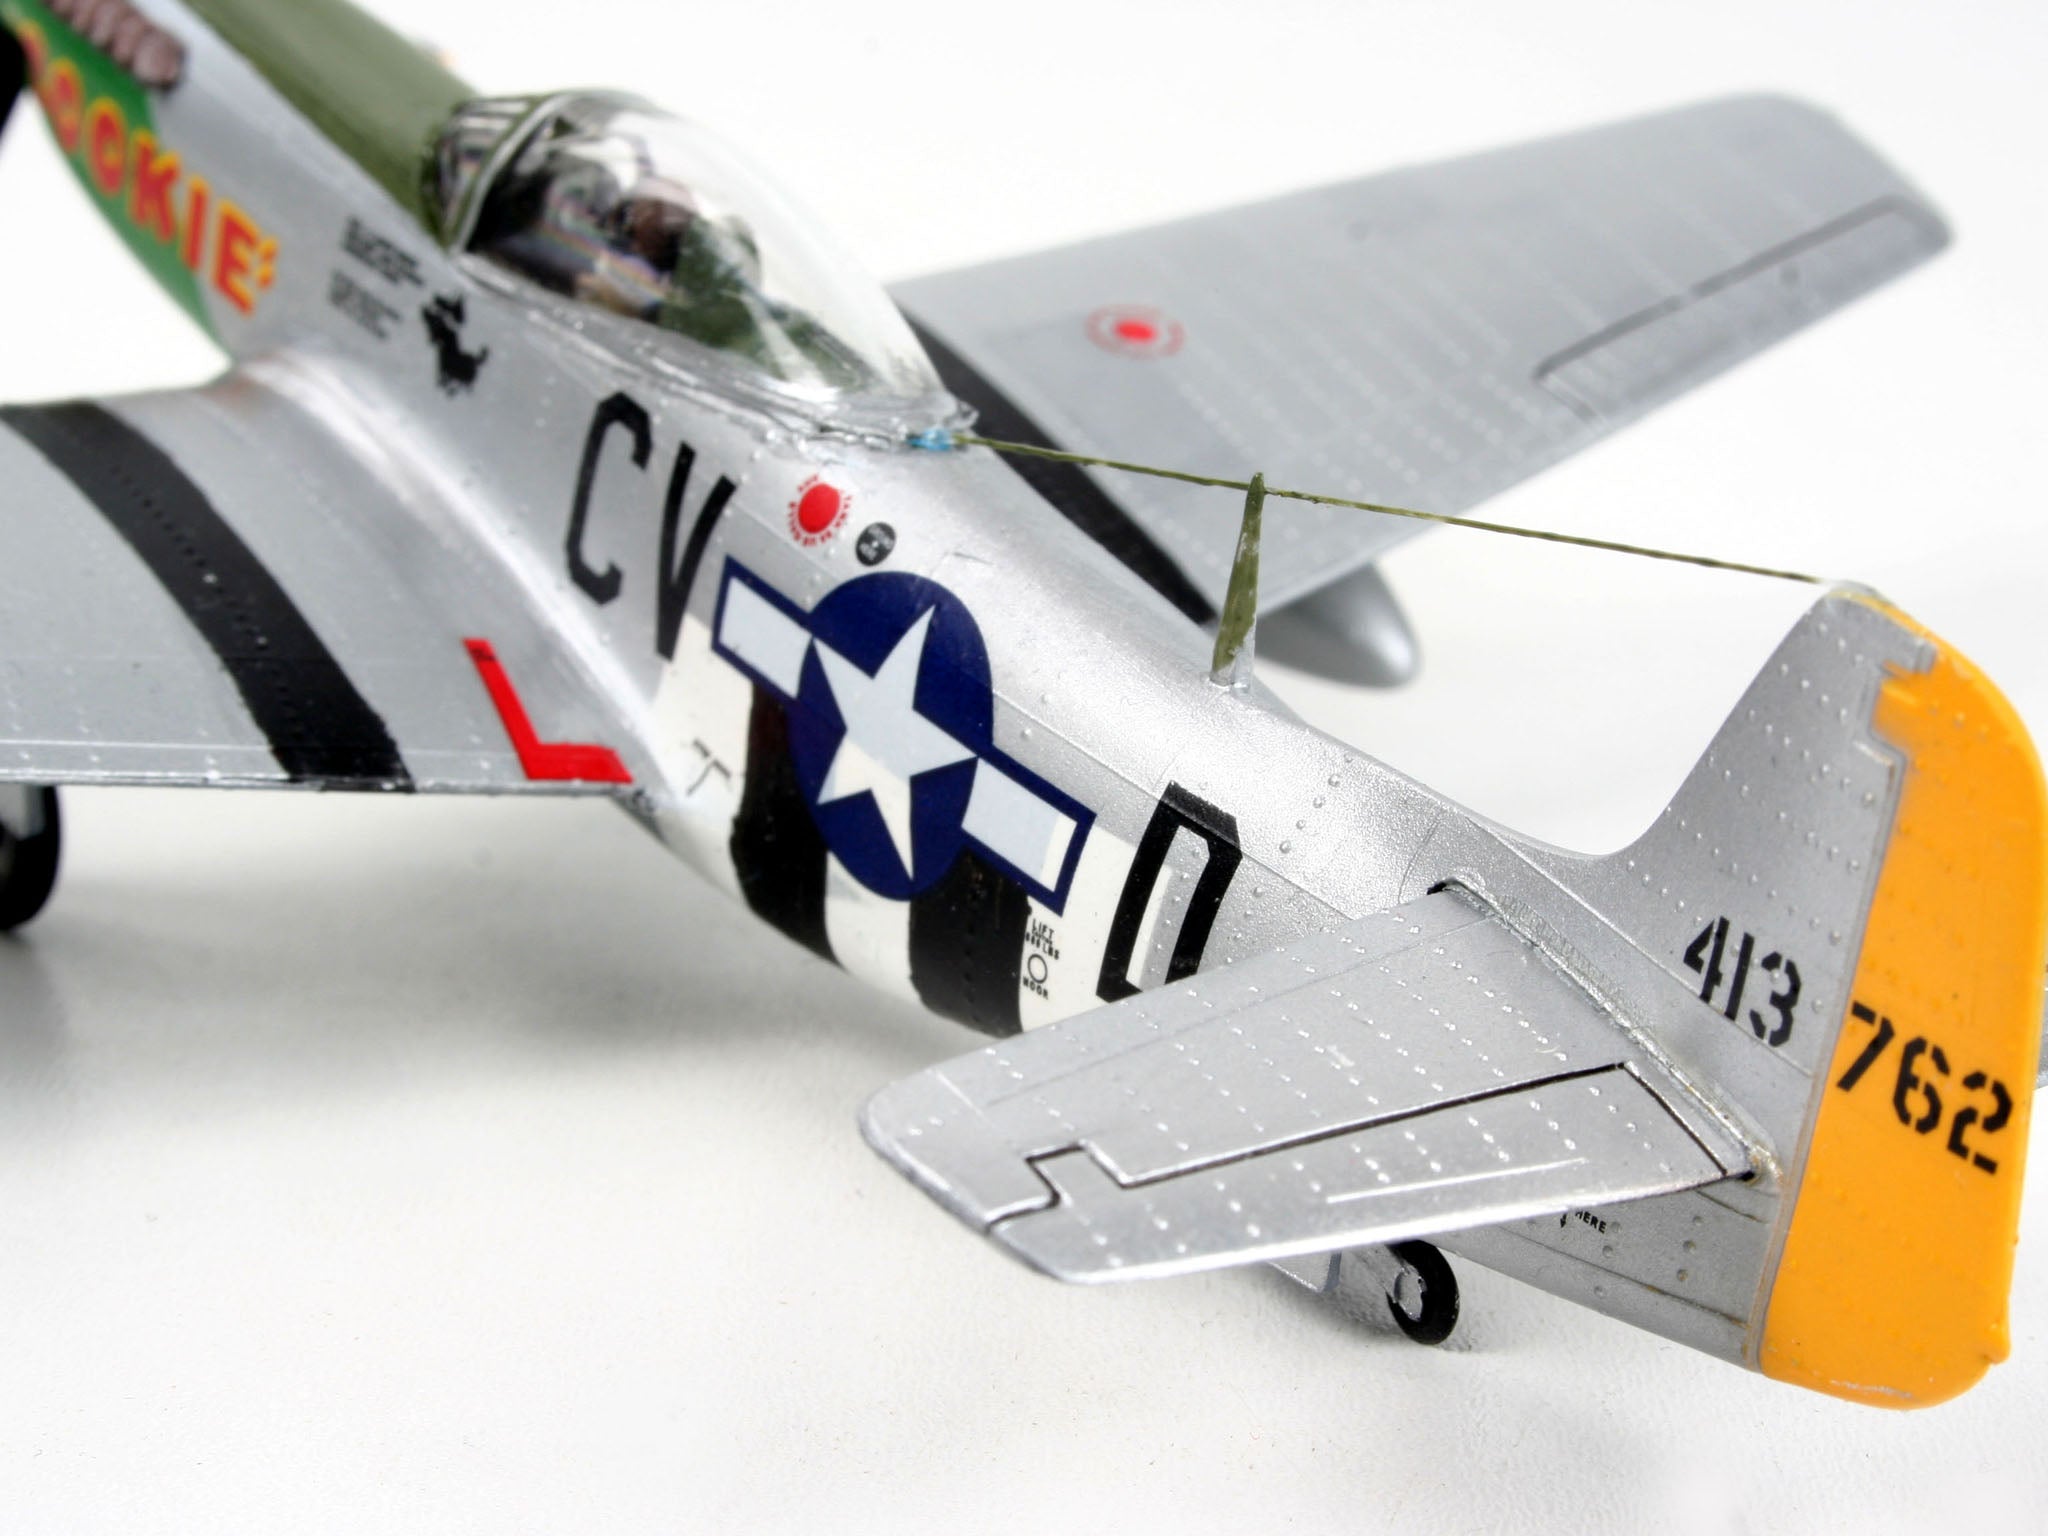 P-51D Mustang Model Set 1:72 Scale Kit